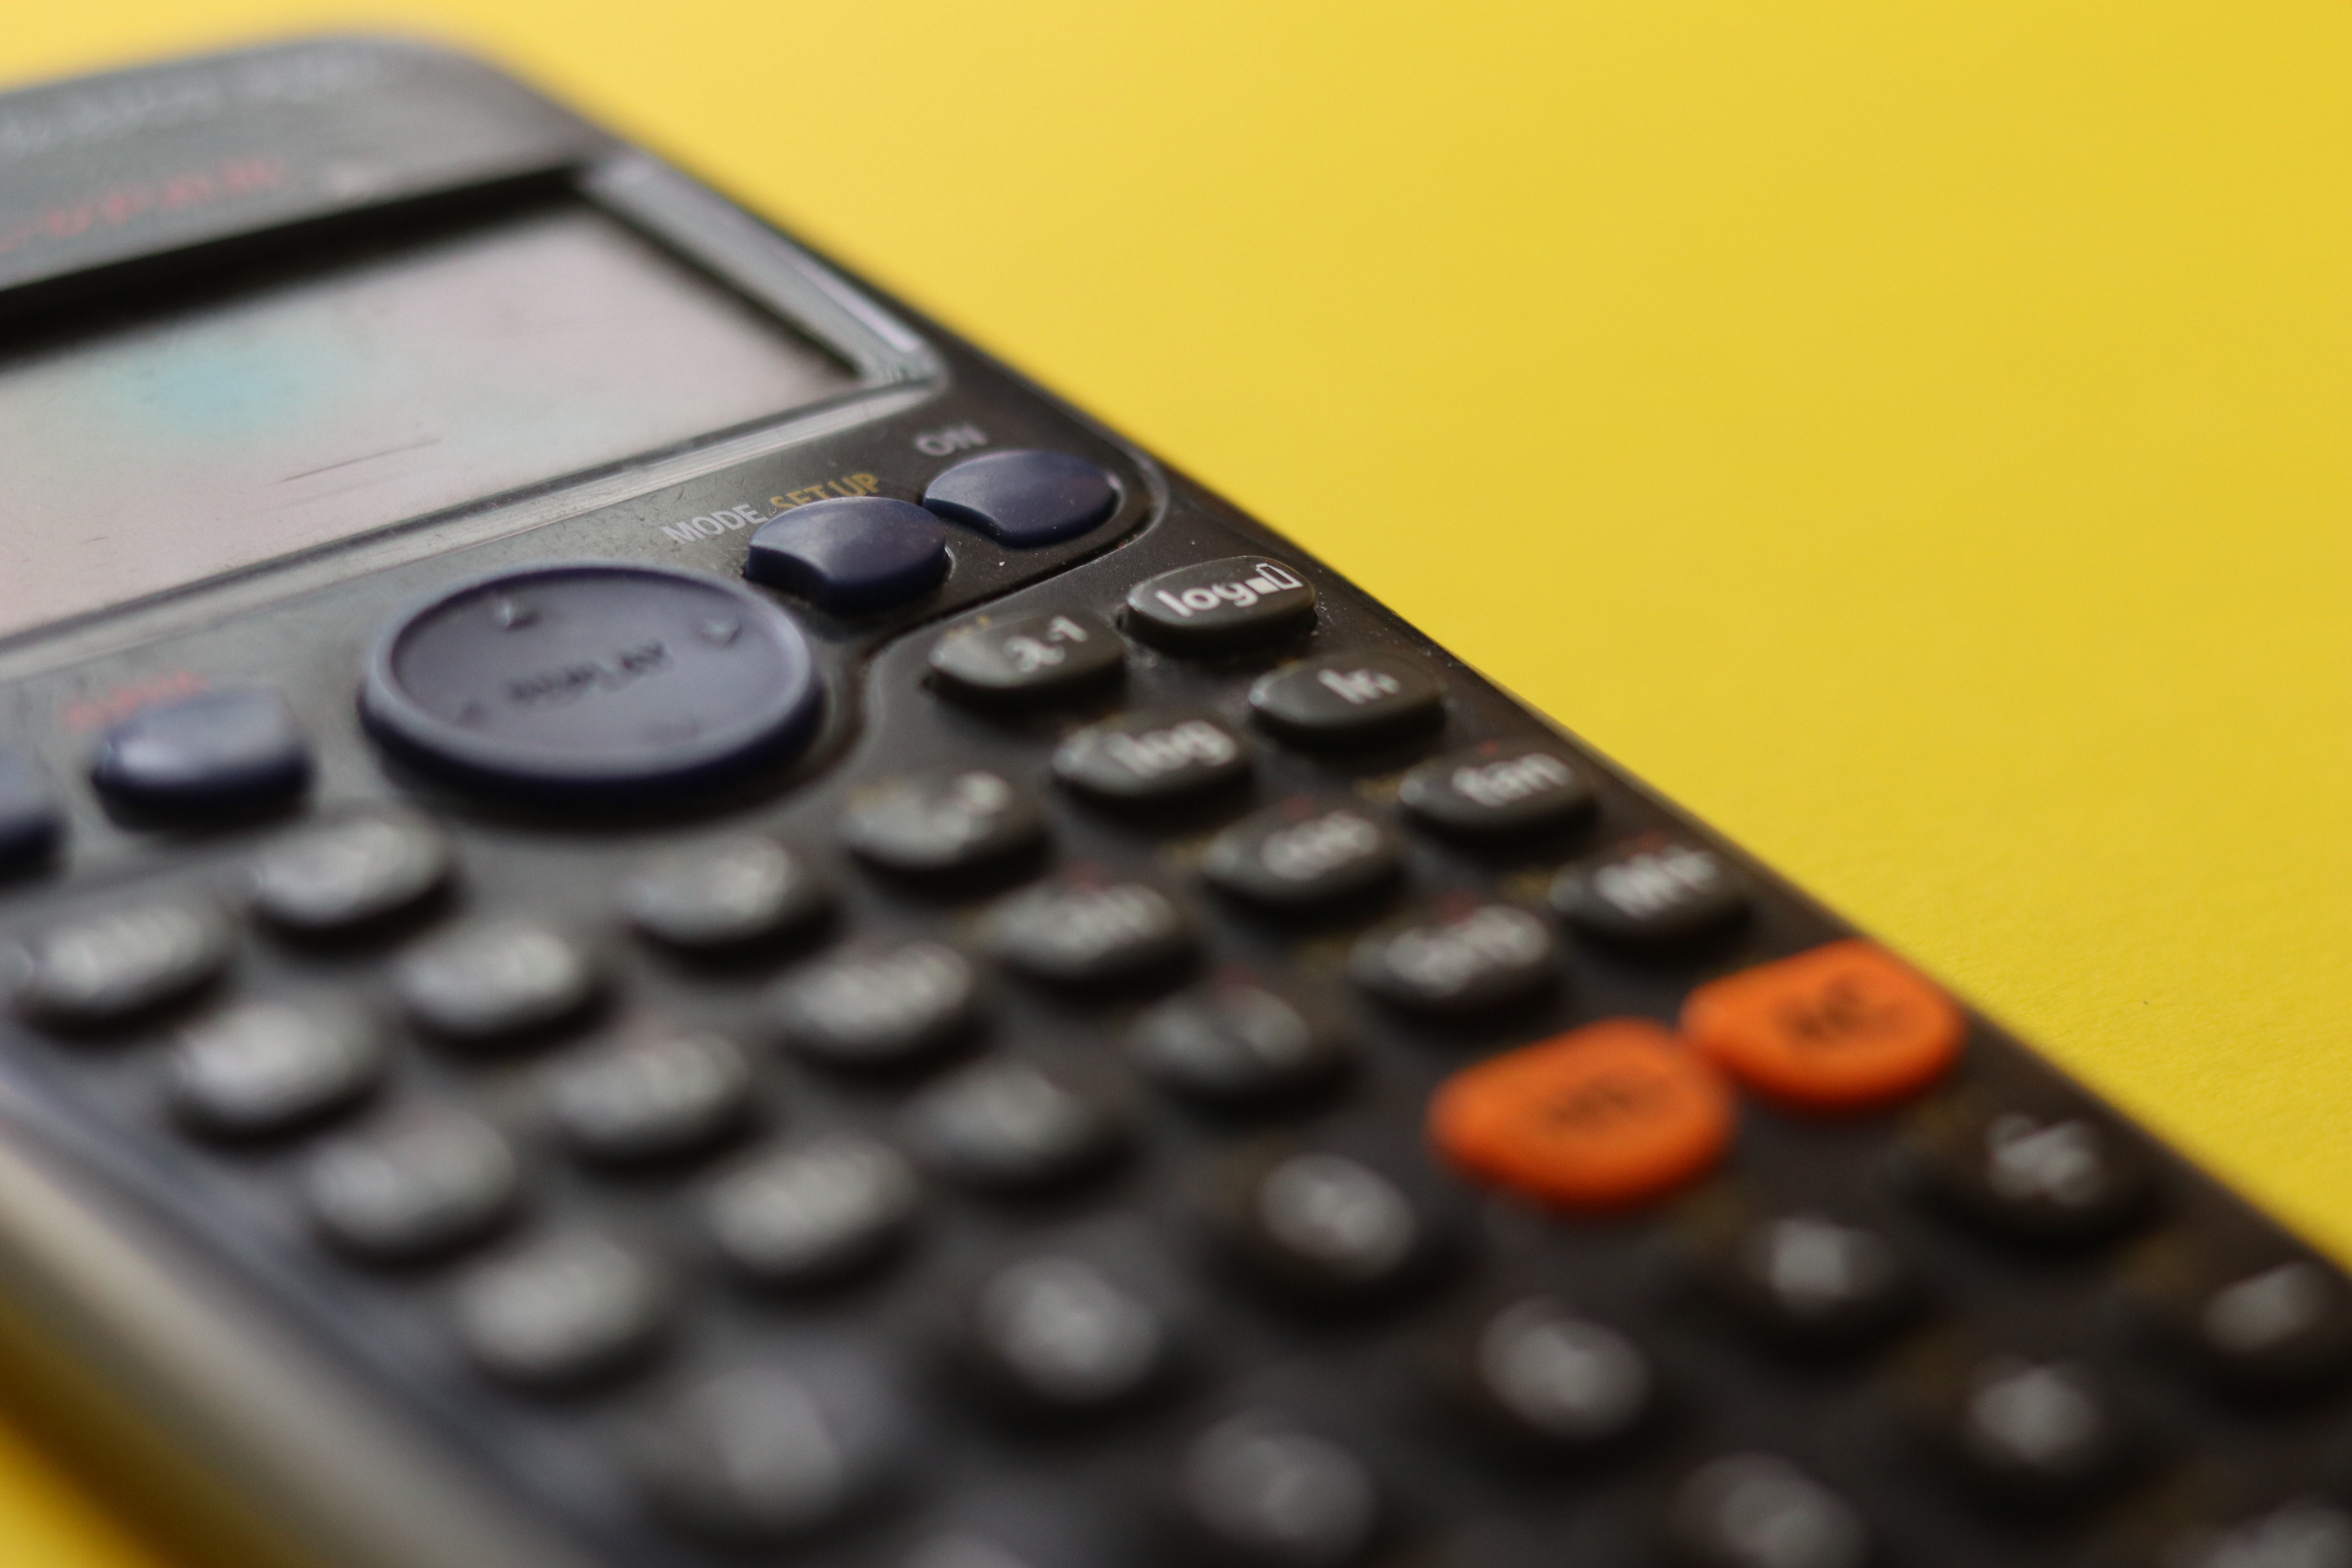 A calculator on a yellow background; image by Clayton Robbins, via Unsplash.com.